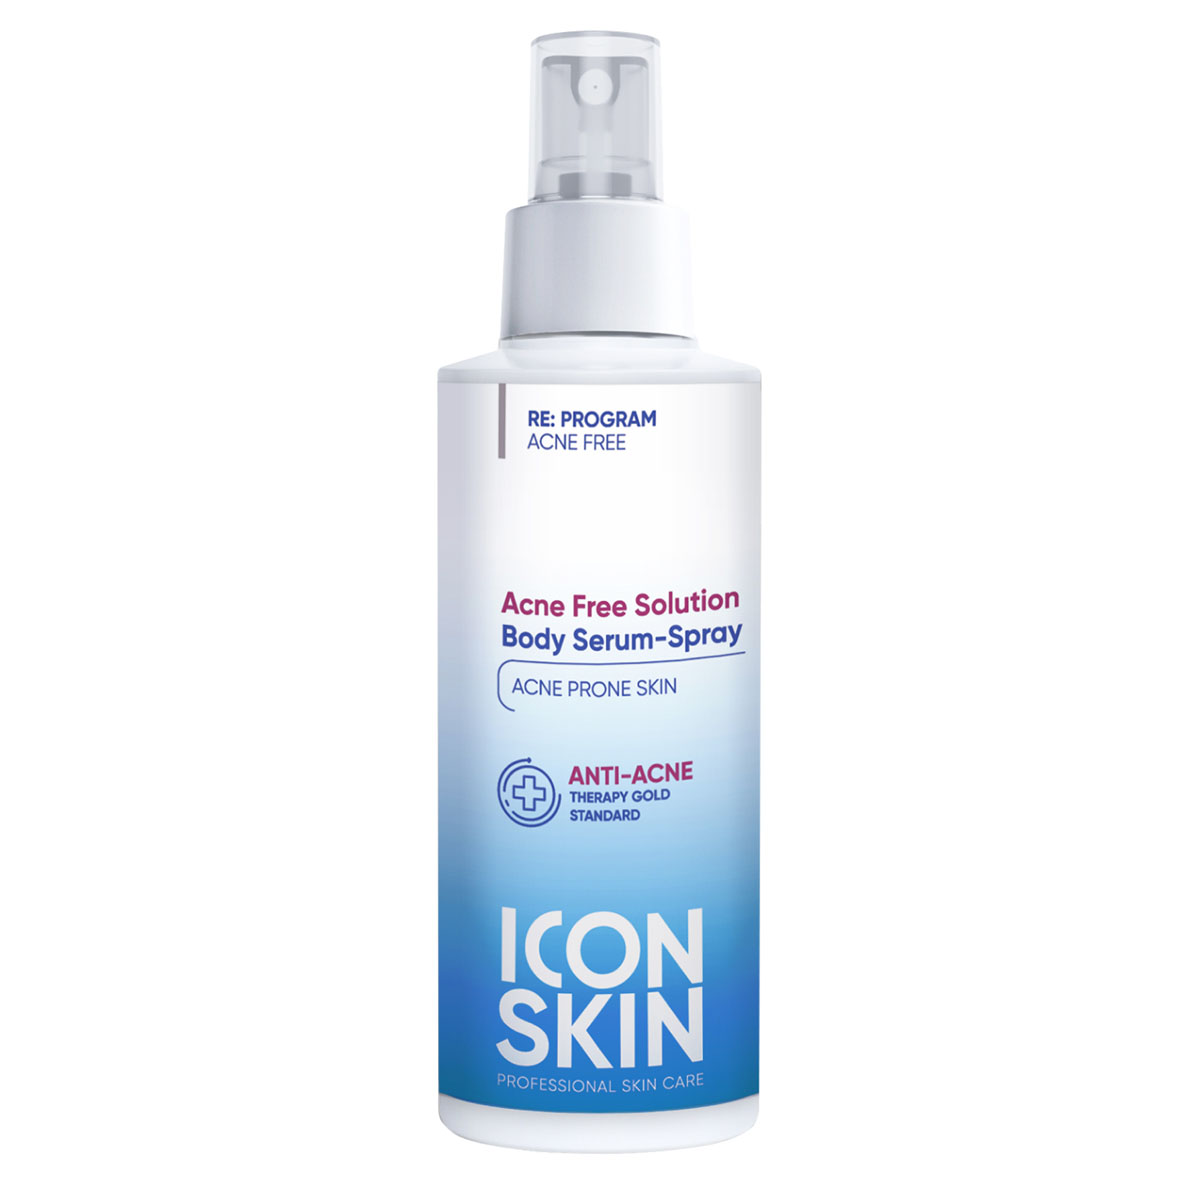 Icon Skin Сыворотка-спрей Acne Free Solution, 100 мл (Icon Skin, Re:Program) цена и фото